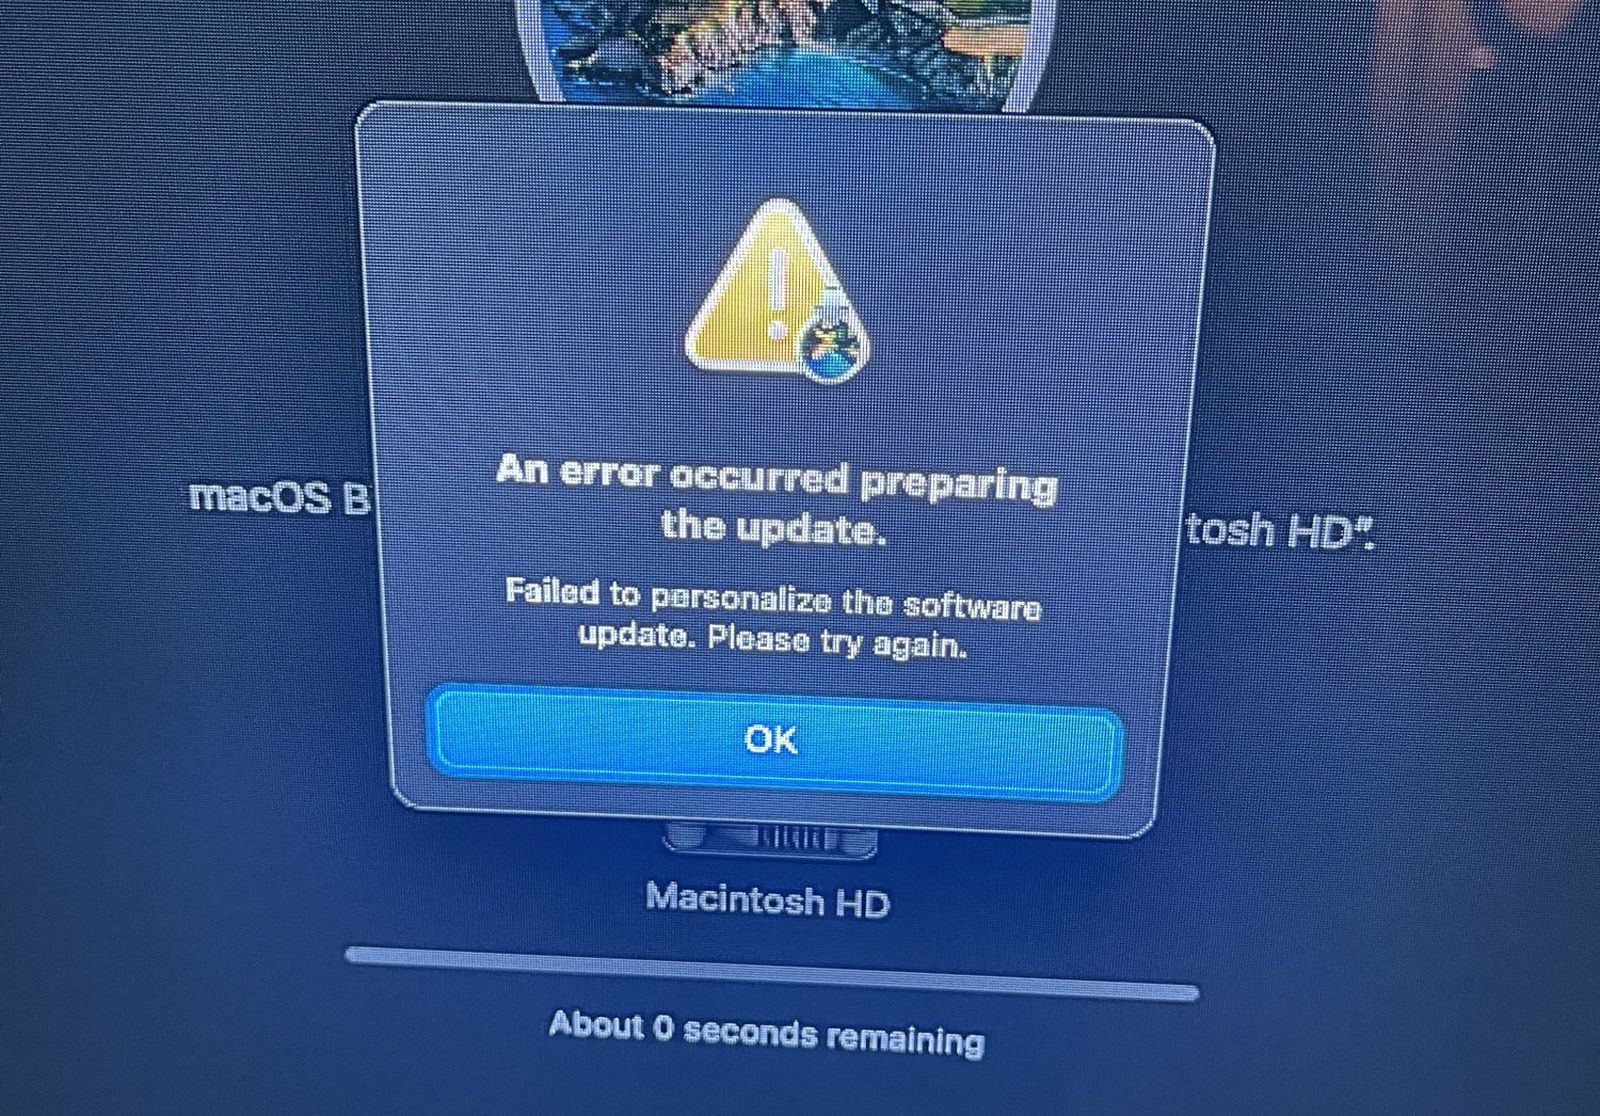 macbook software update failed